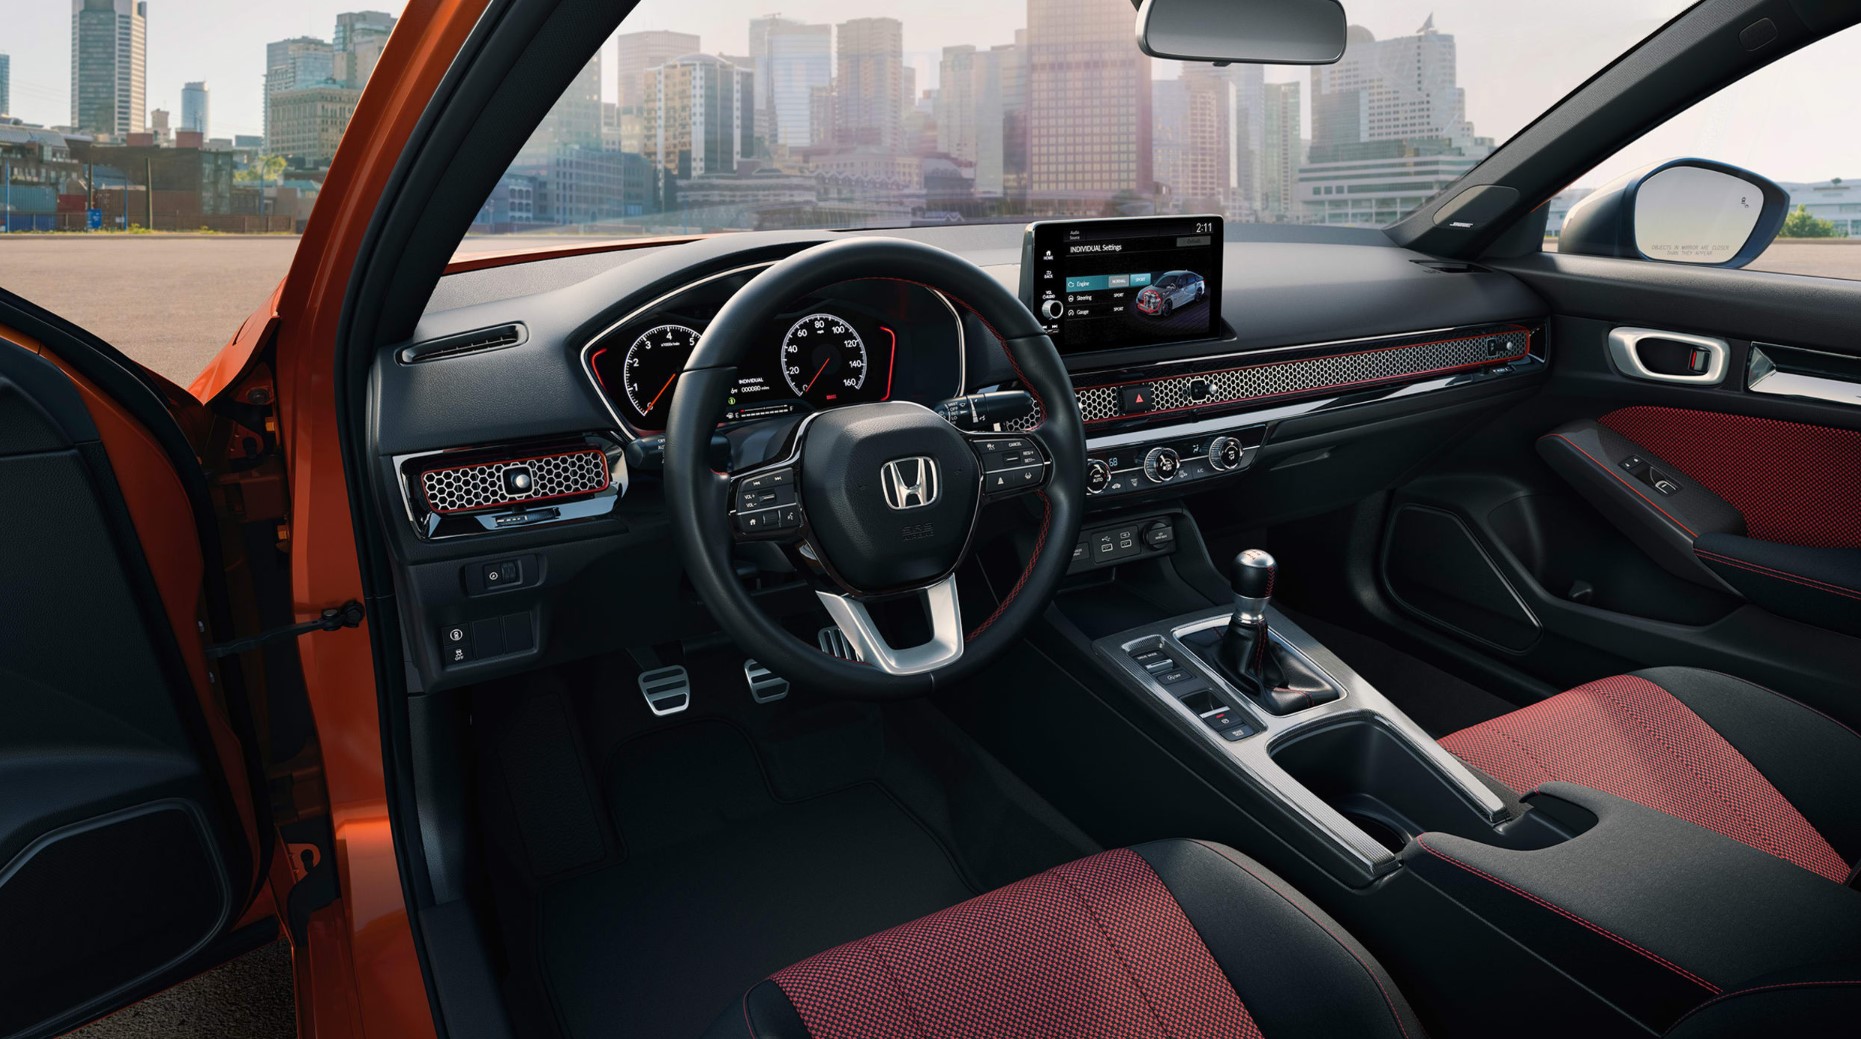 Honda Civic SI 2022 interior 1